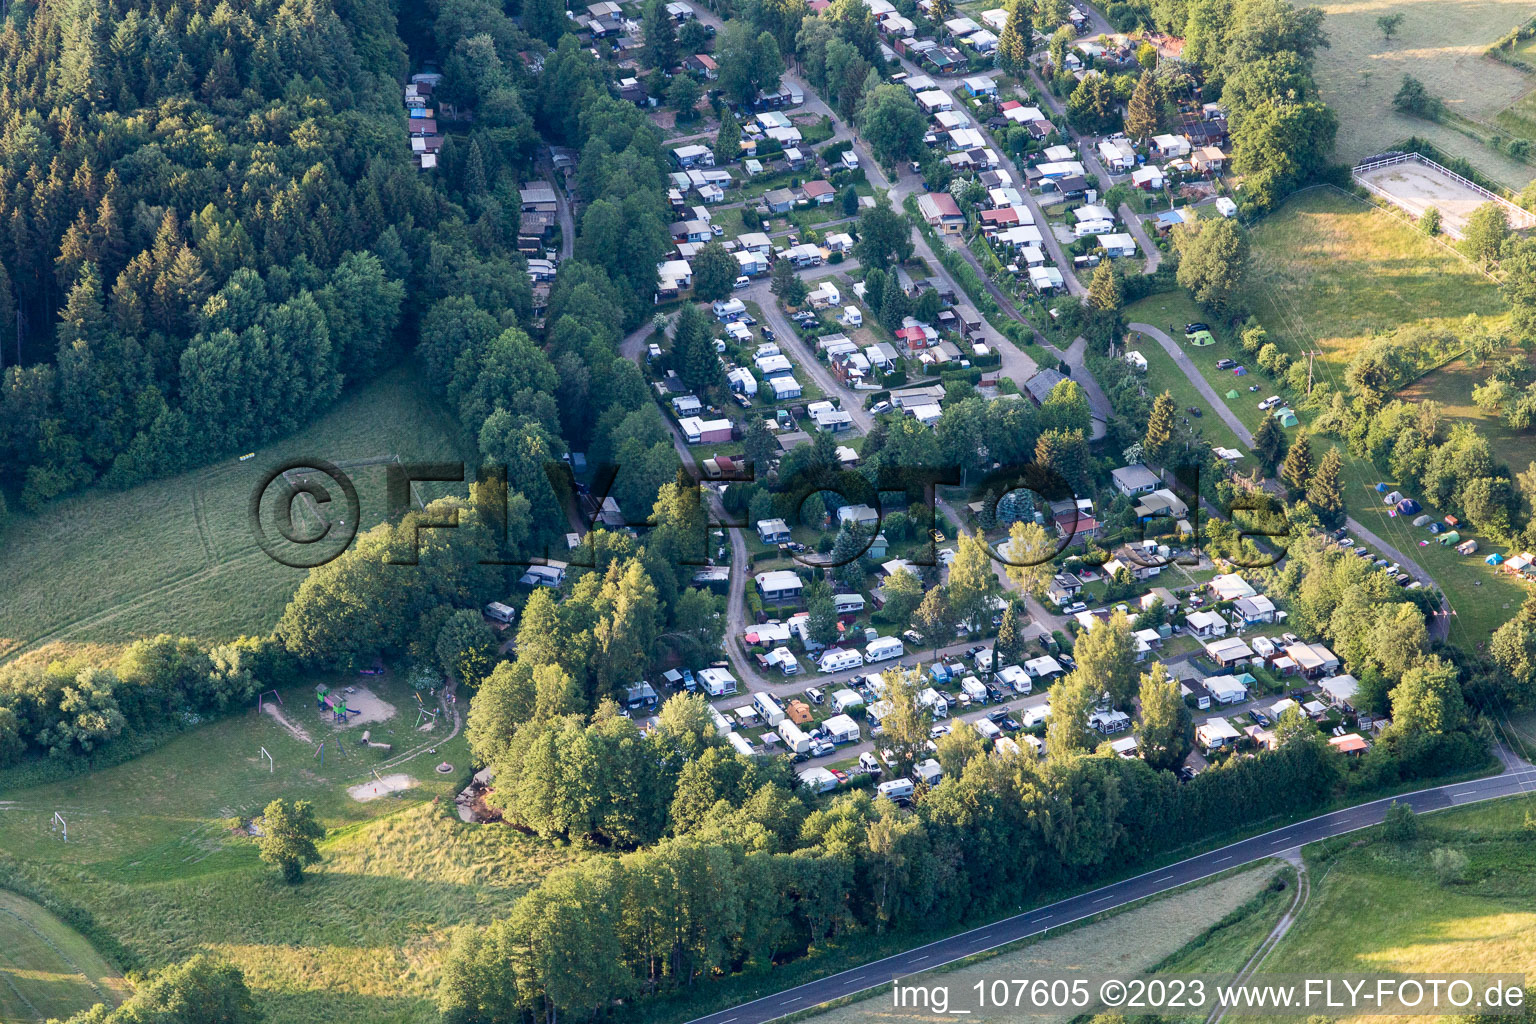 Camping Odenwald à Krumbach dans le département Bade-Wurtemberg, Allemagne hors des airs